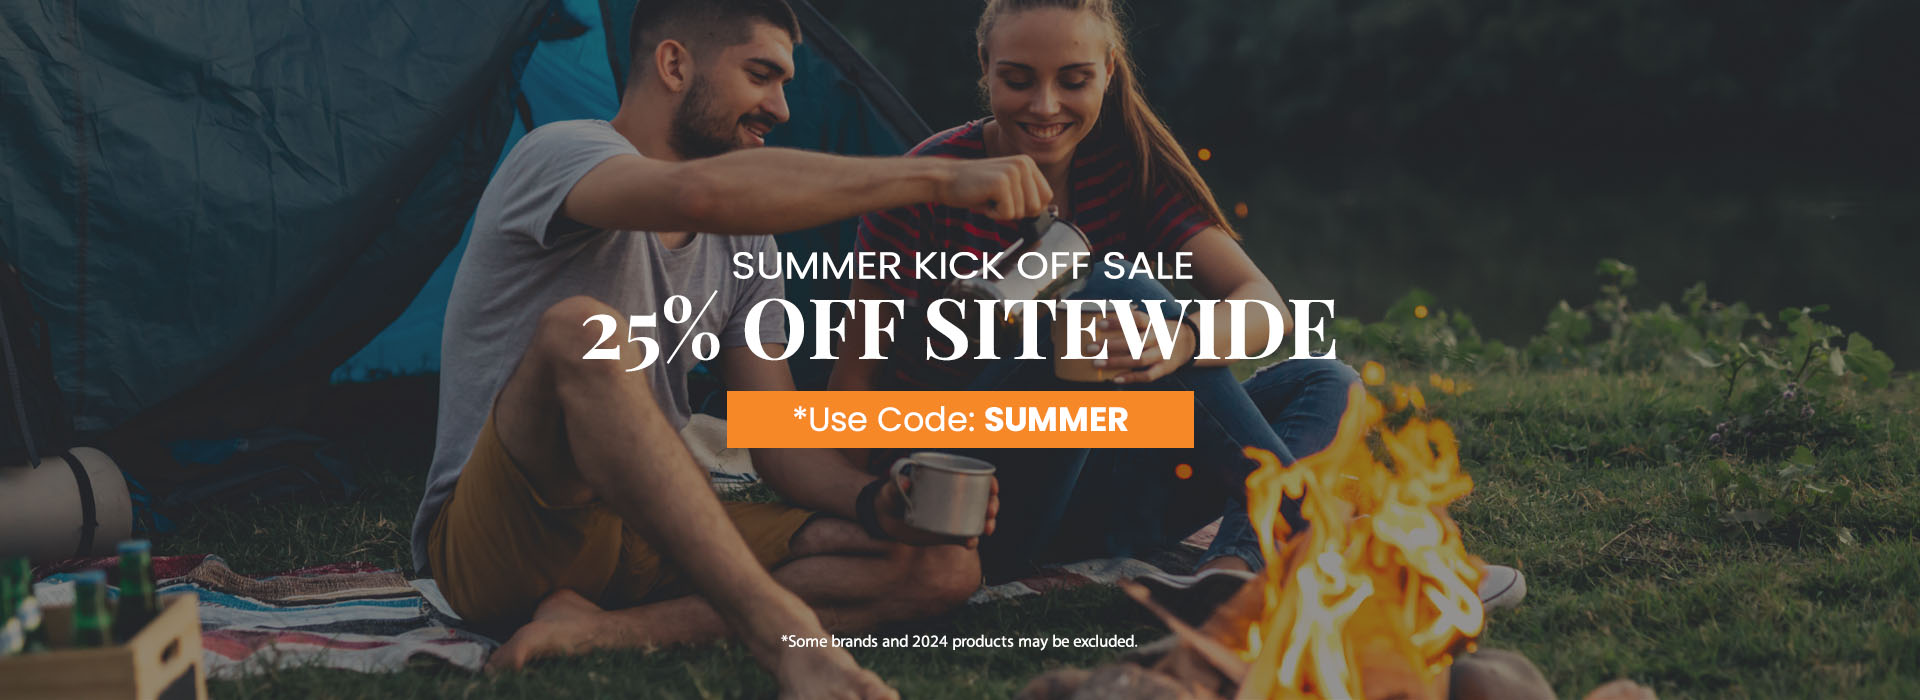 Summer Kick Off Sale. Use Code: SUMMER At Checkout!